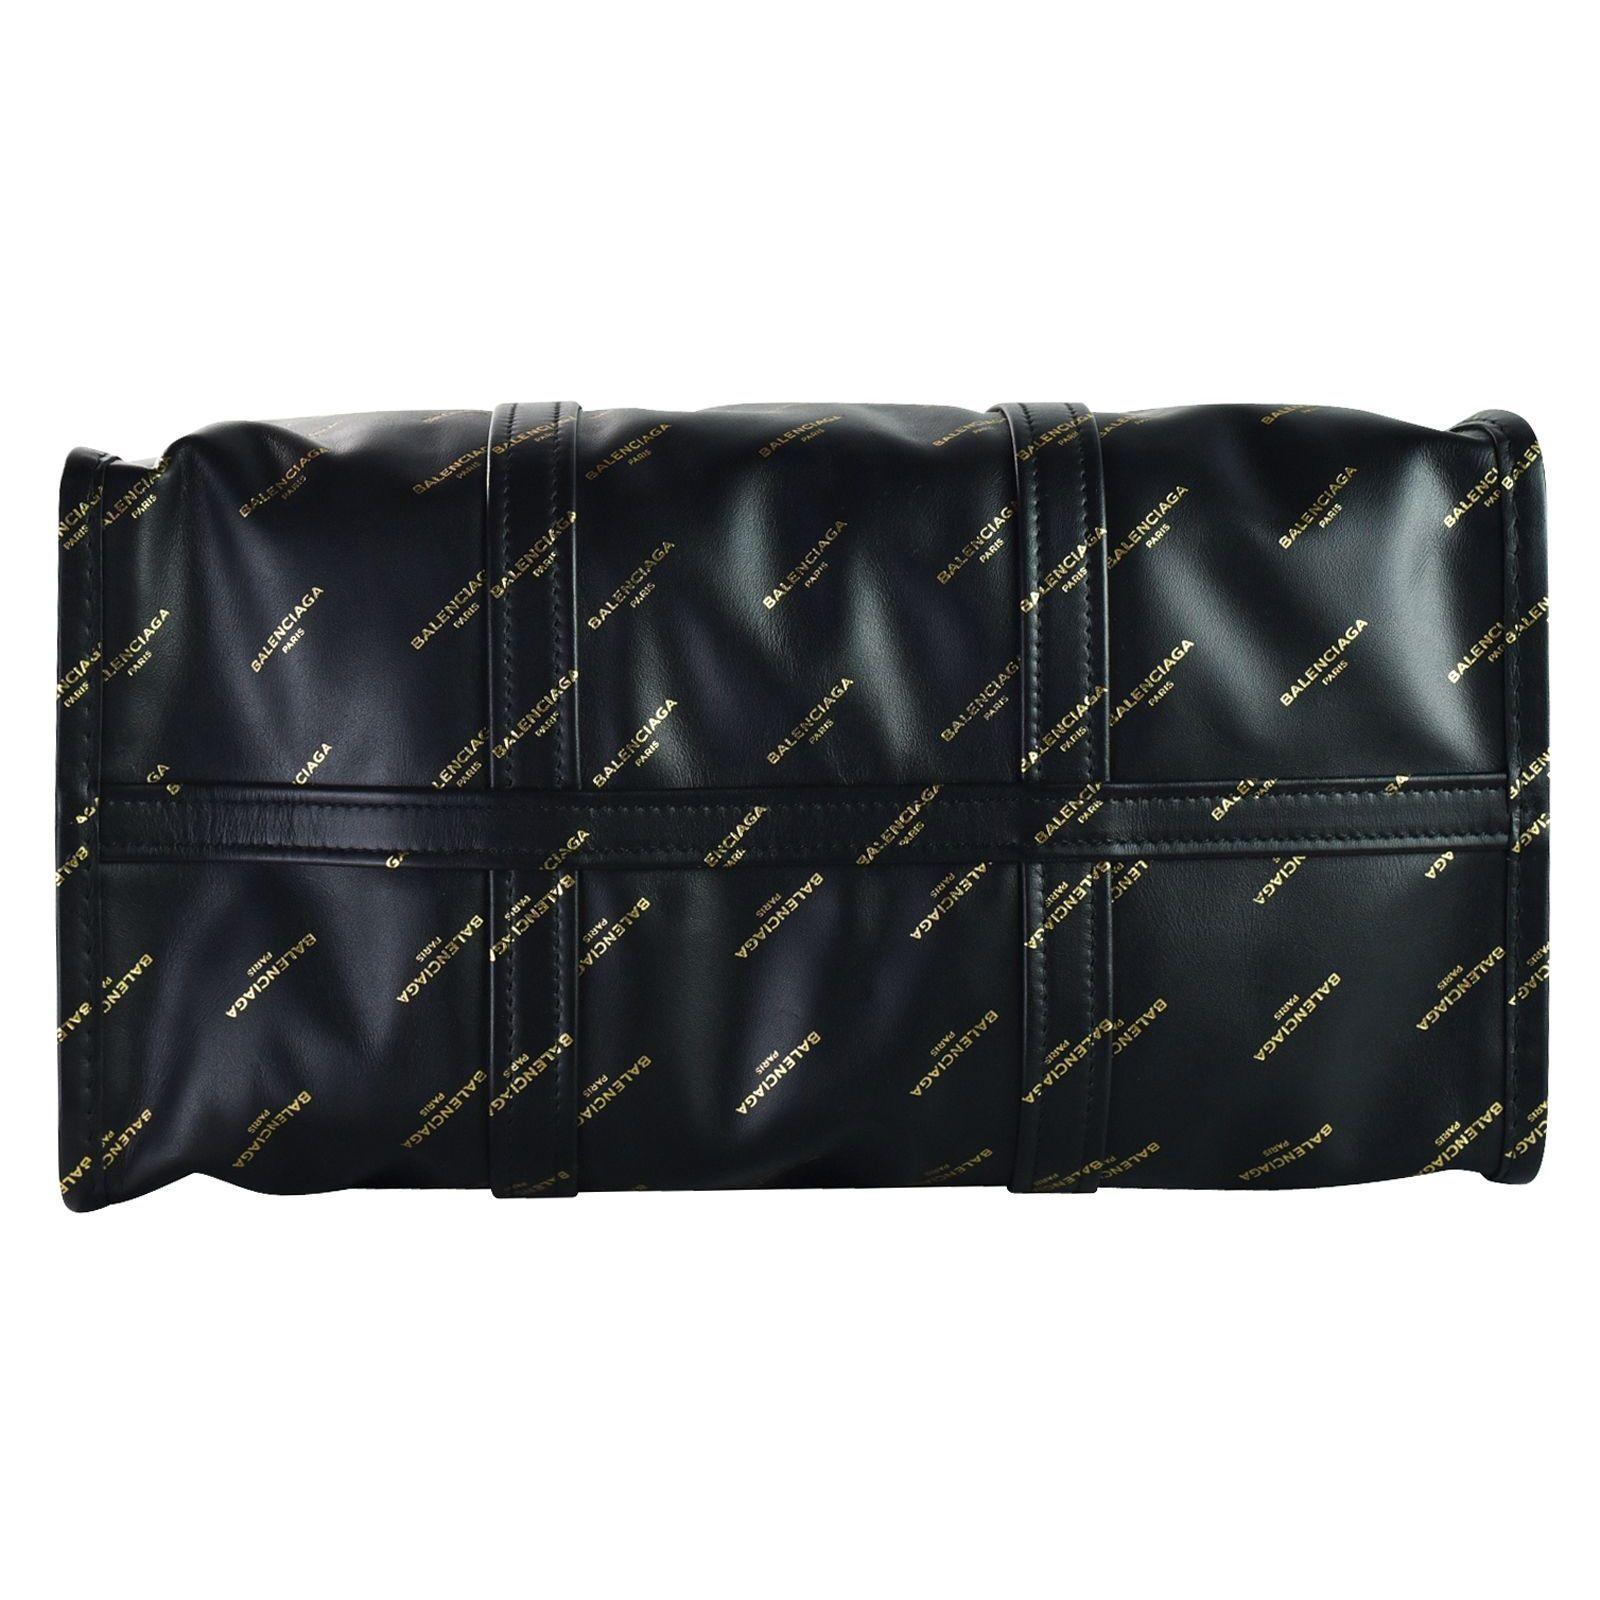 Balenciaga NEW Bazar Shopper M Black Leather Tote Bag Handbag 1